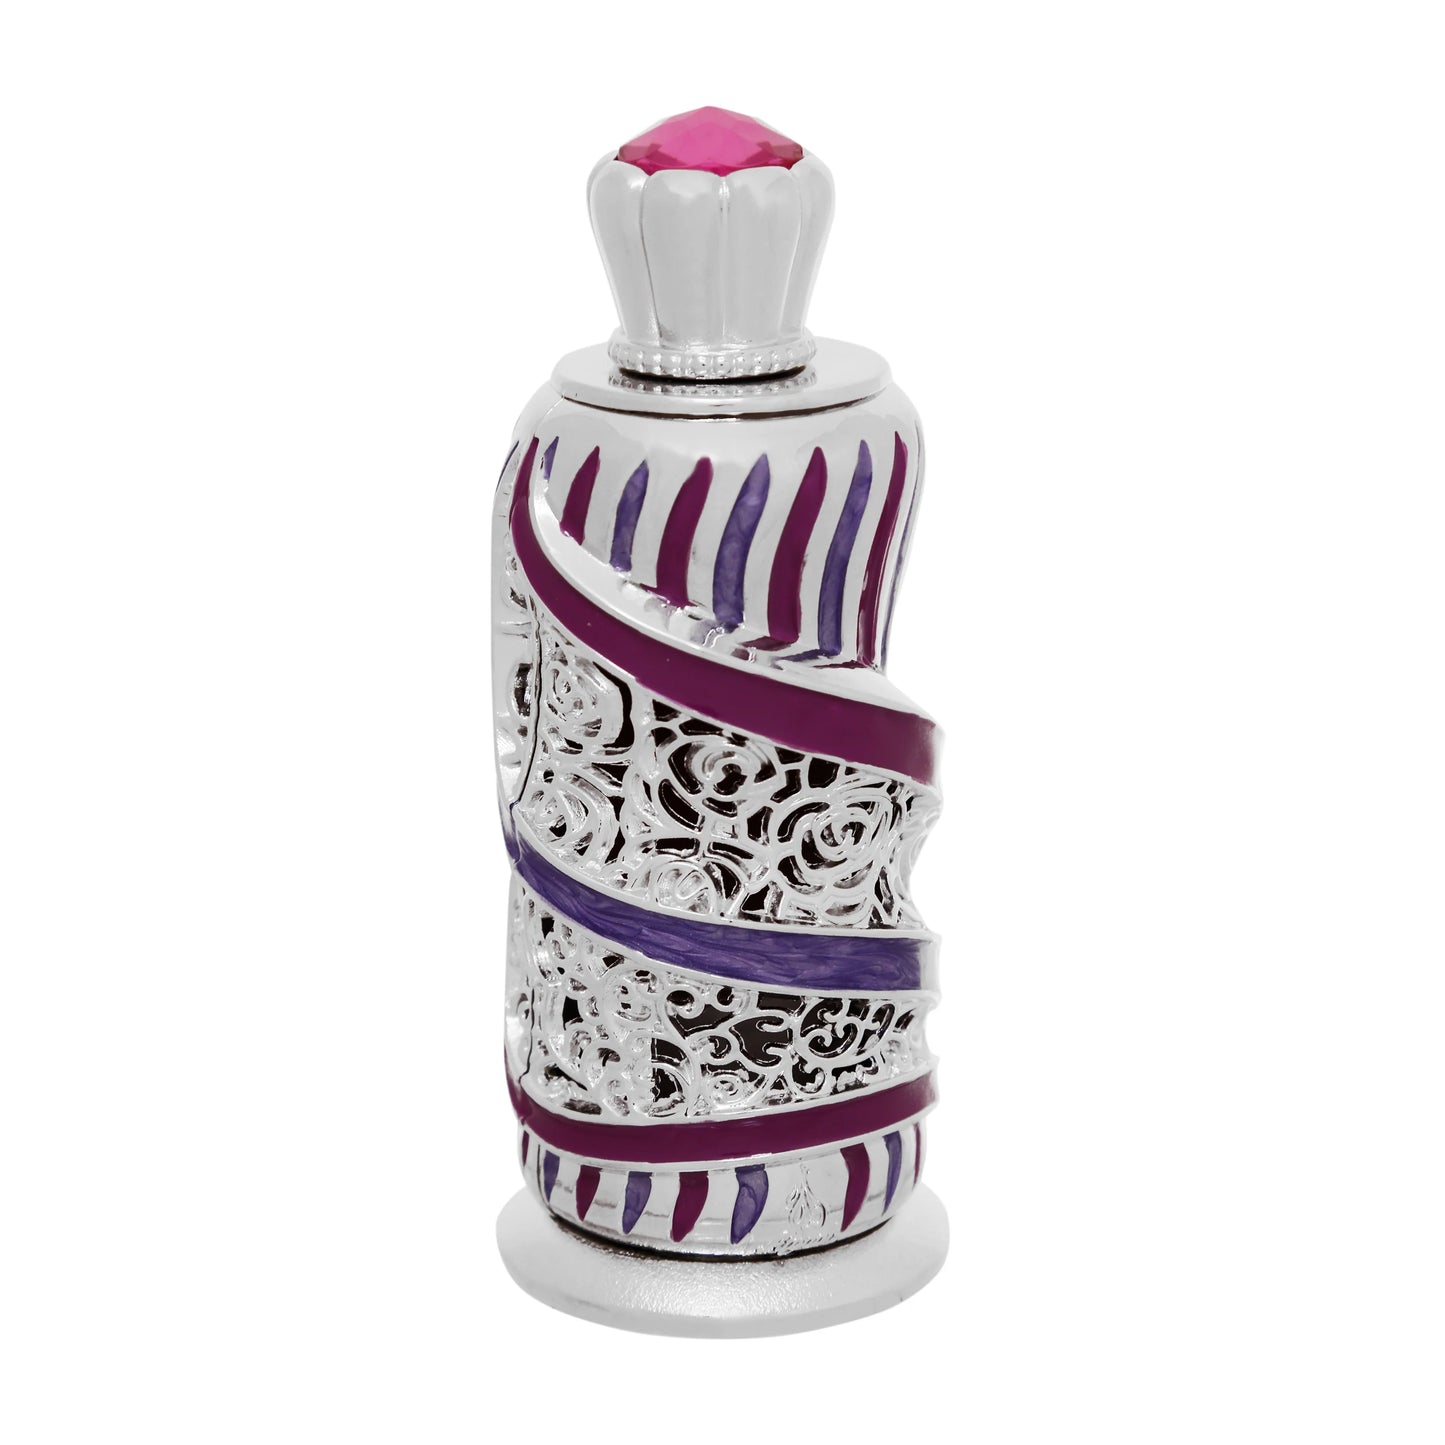 Khadlaj Zainab Concentrated Perfume Oil 18ML